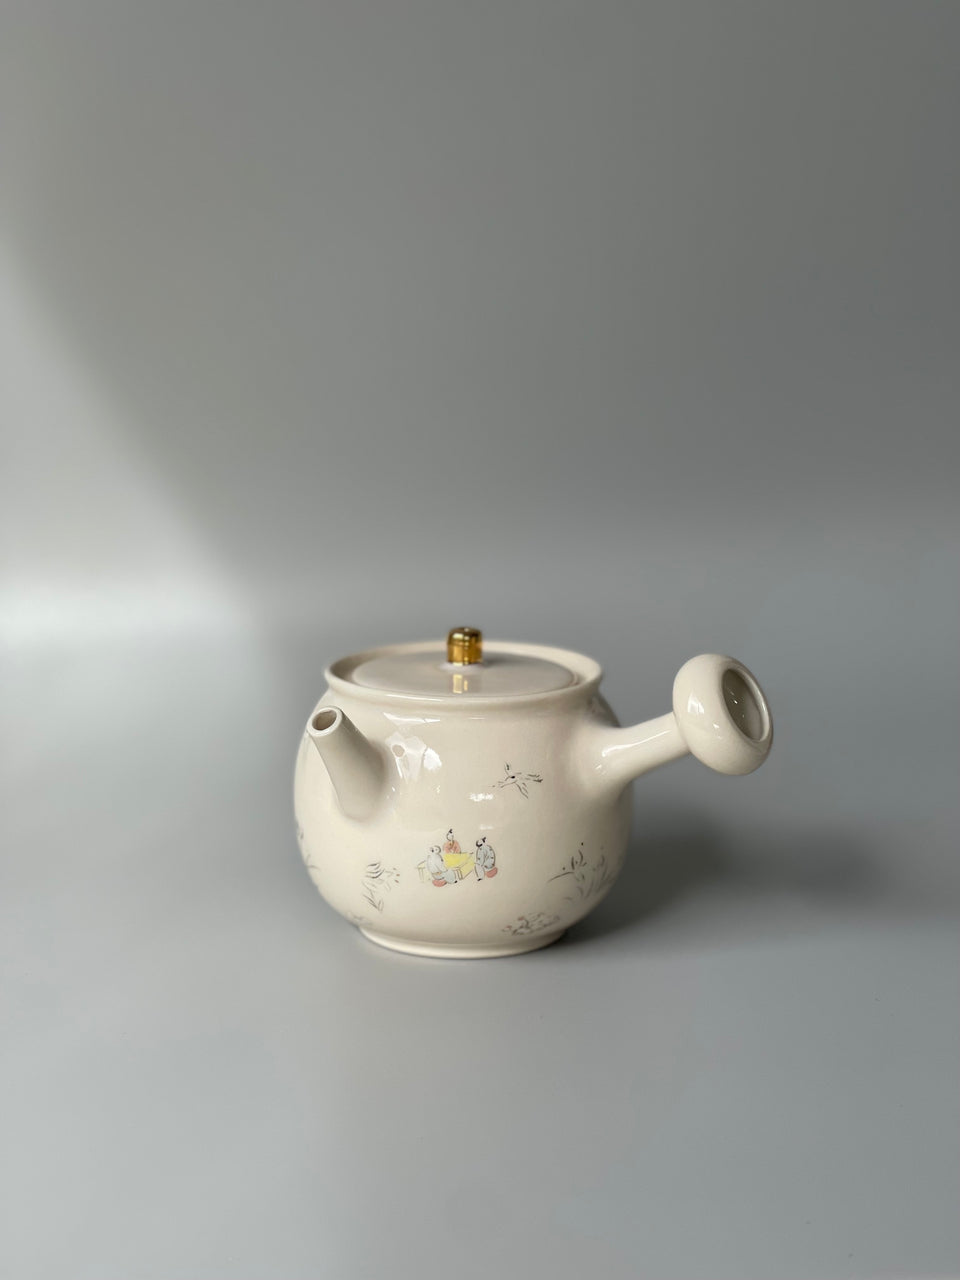 Exquisite Artisan Teapots by Award-Winning Ceramists - Unite Art & Tea